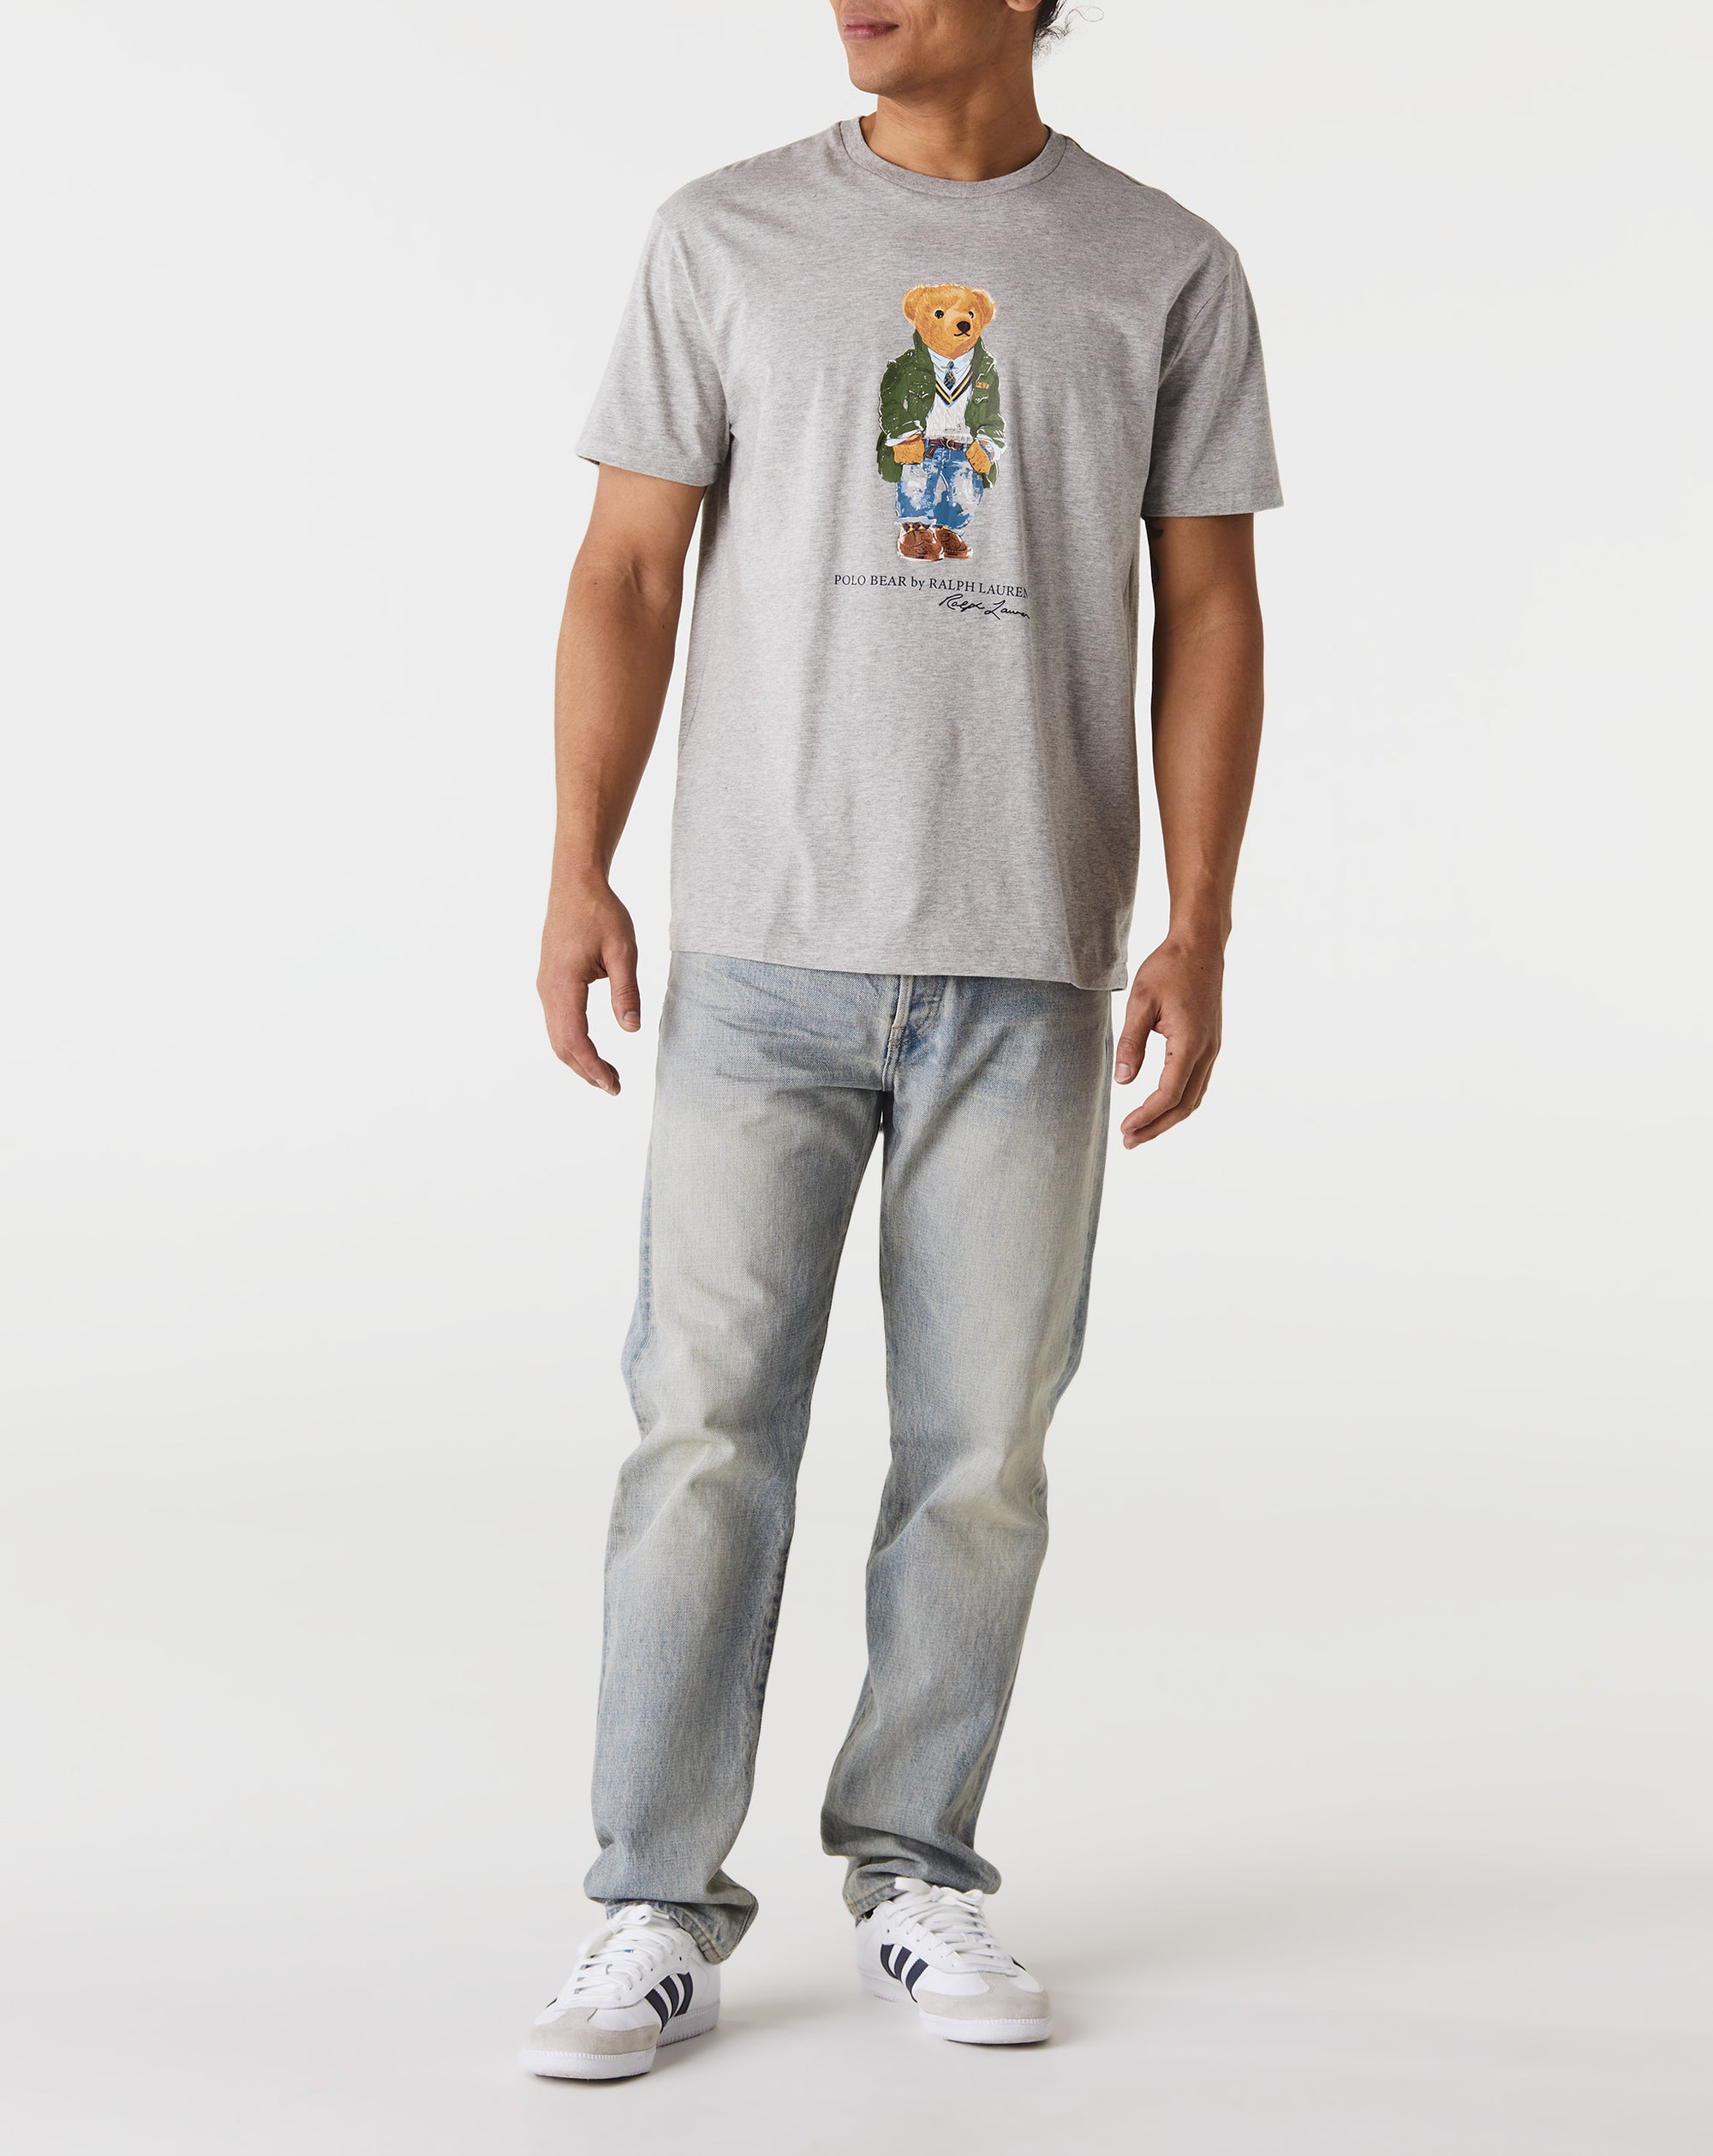 Polo Ralph Lauren Heritage Bear T-Shirt - Rule of Next Apparel